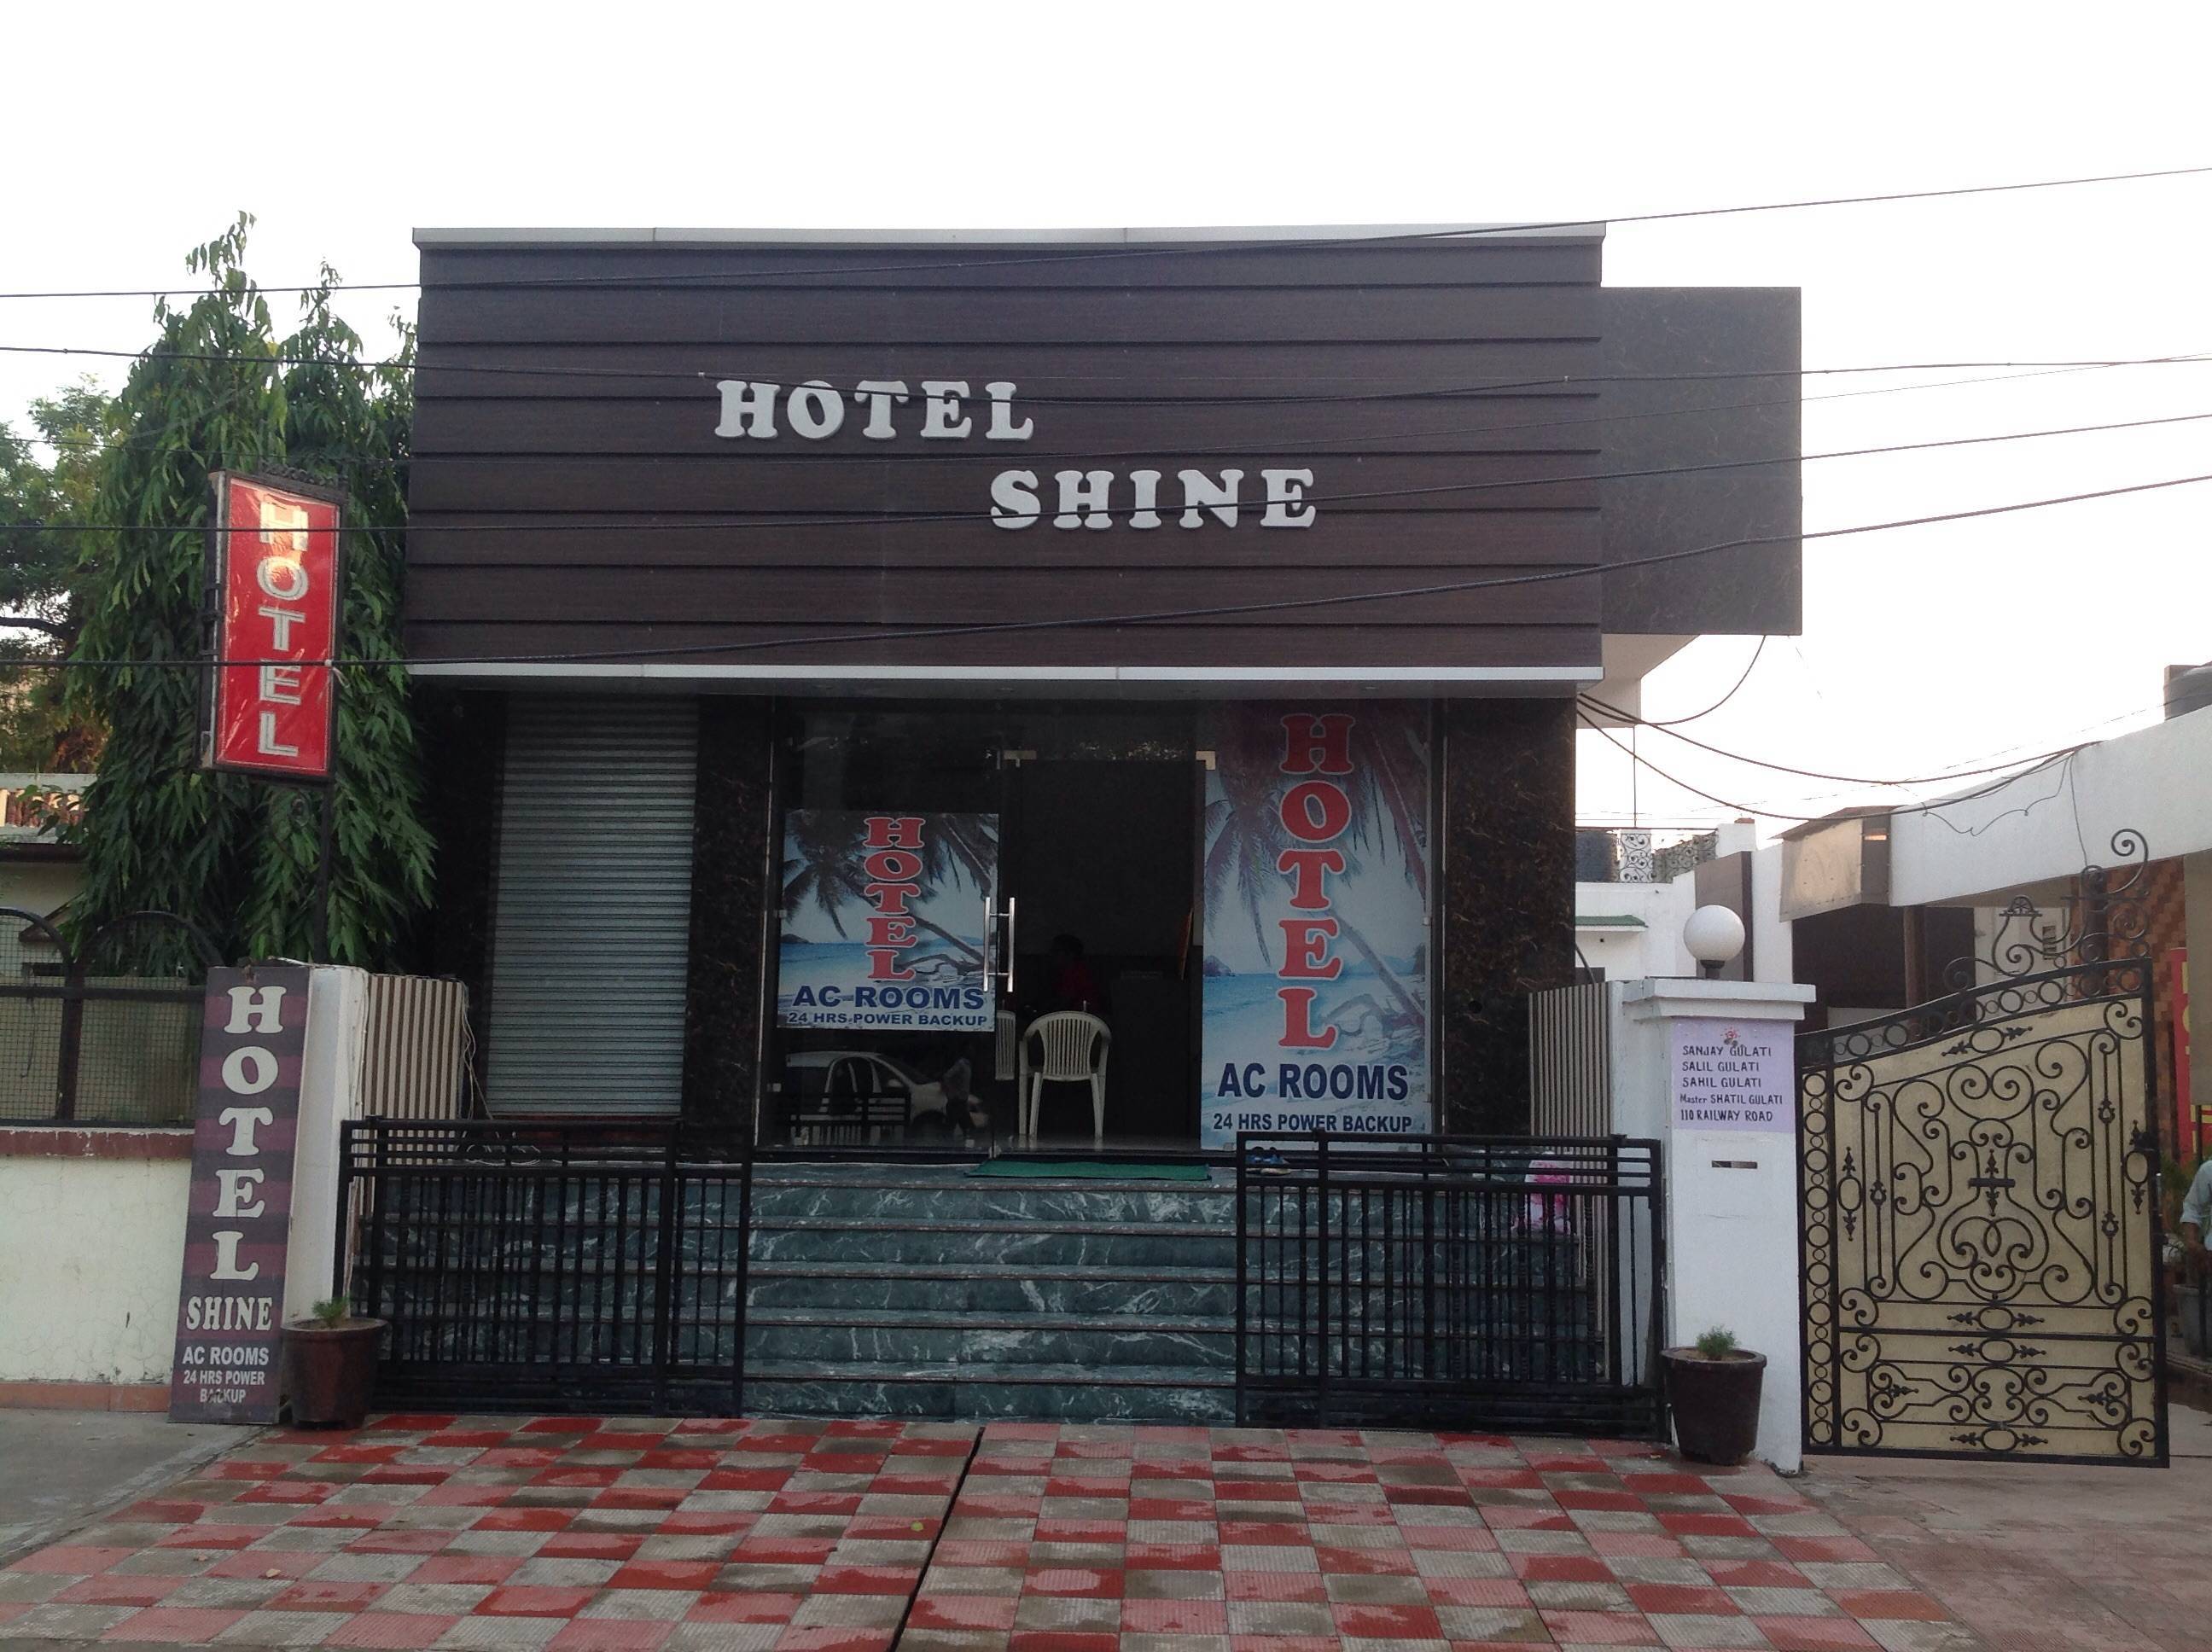 Hotel Shine|Inn|Accomodation